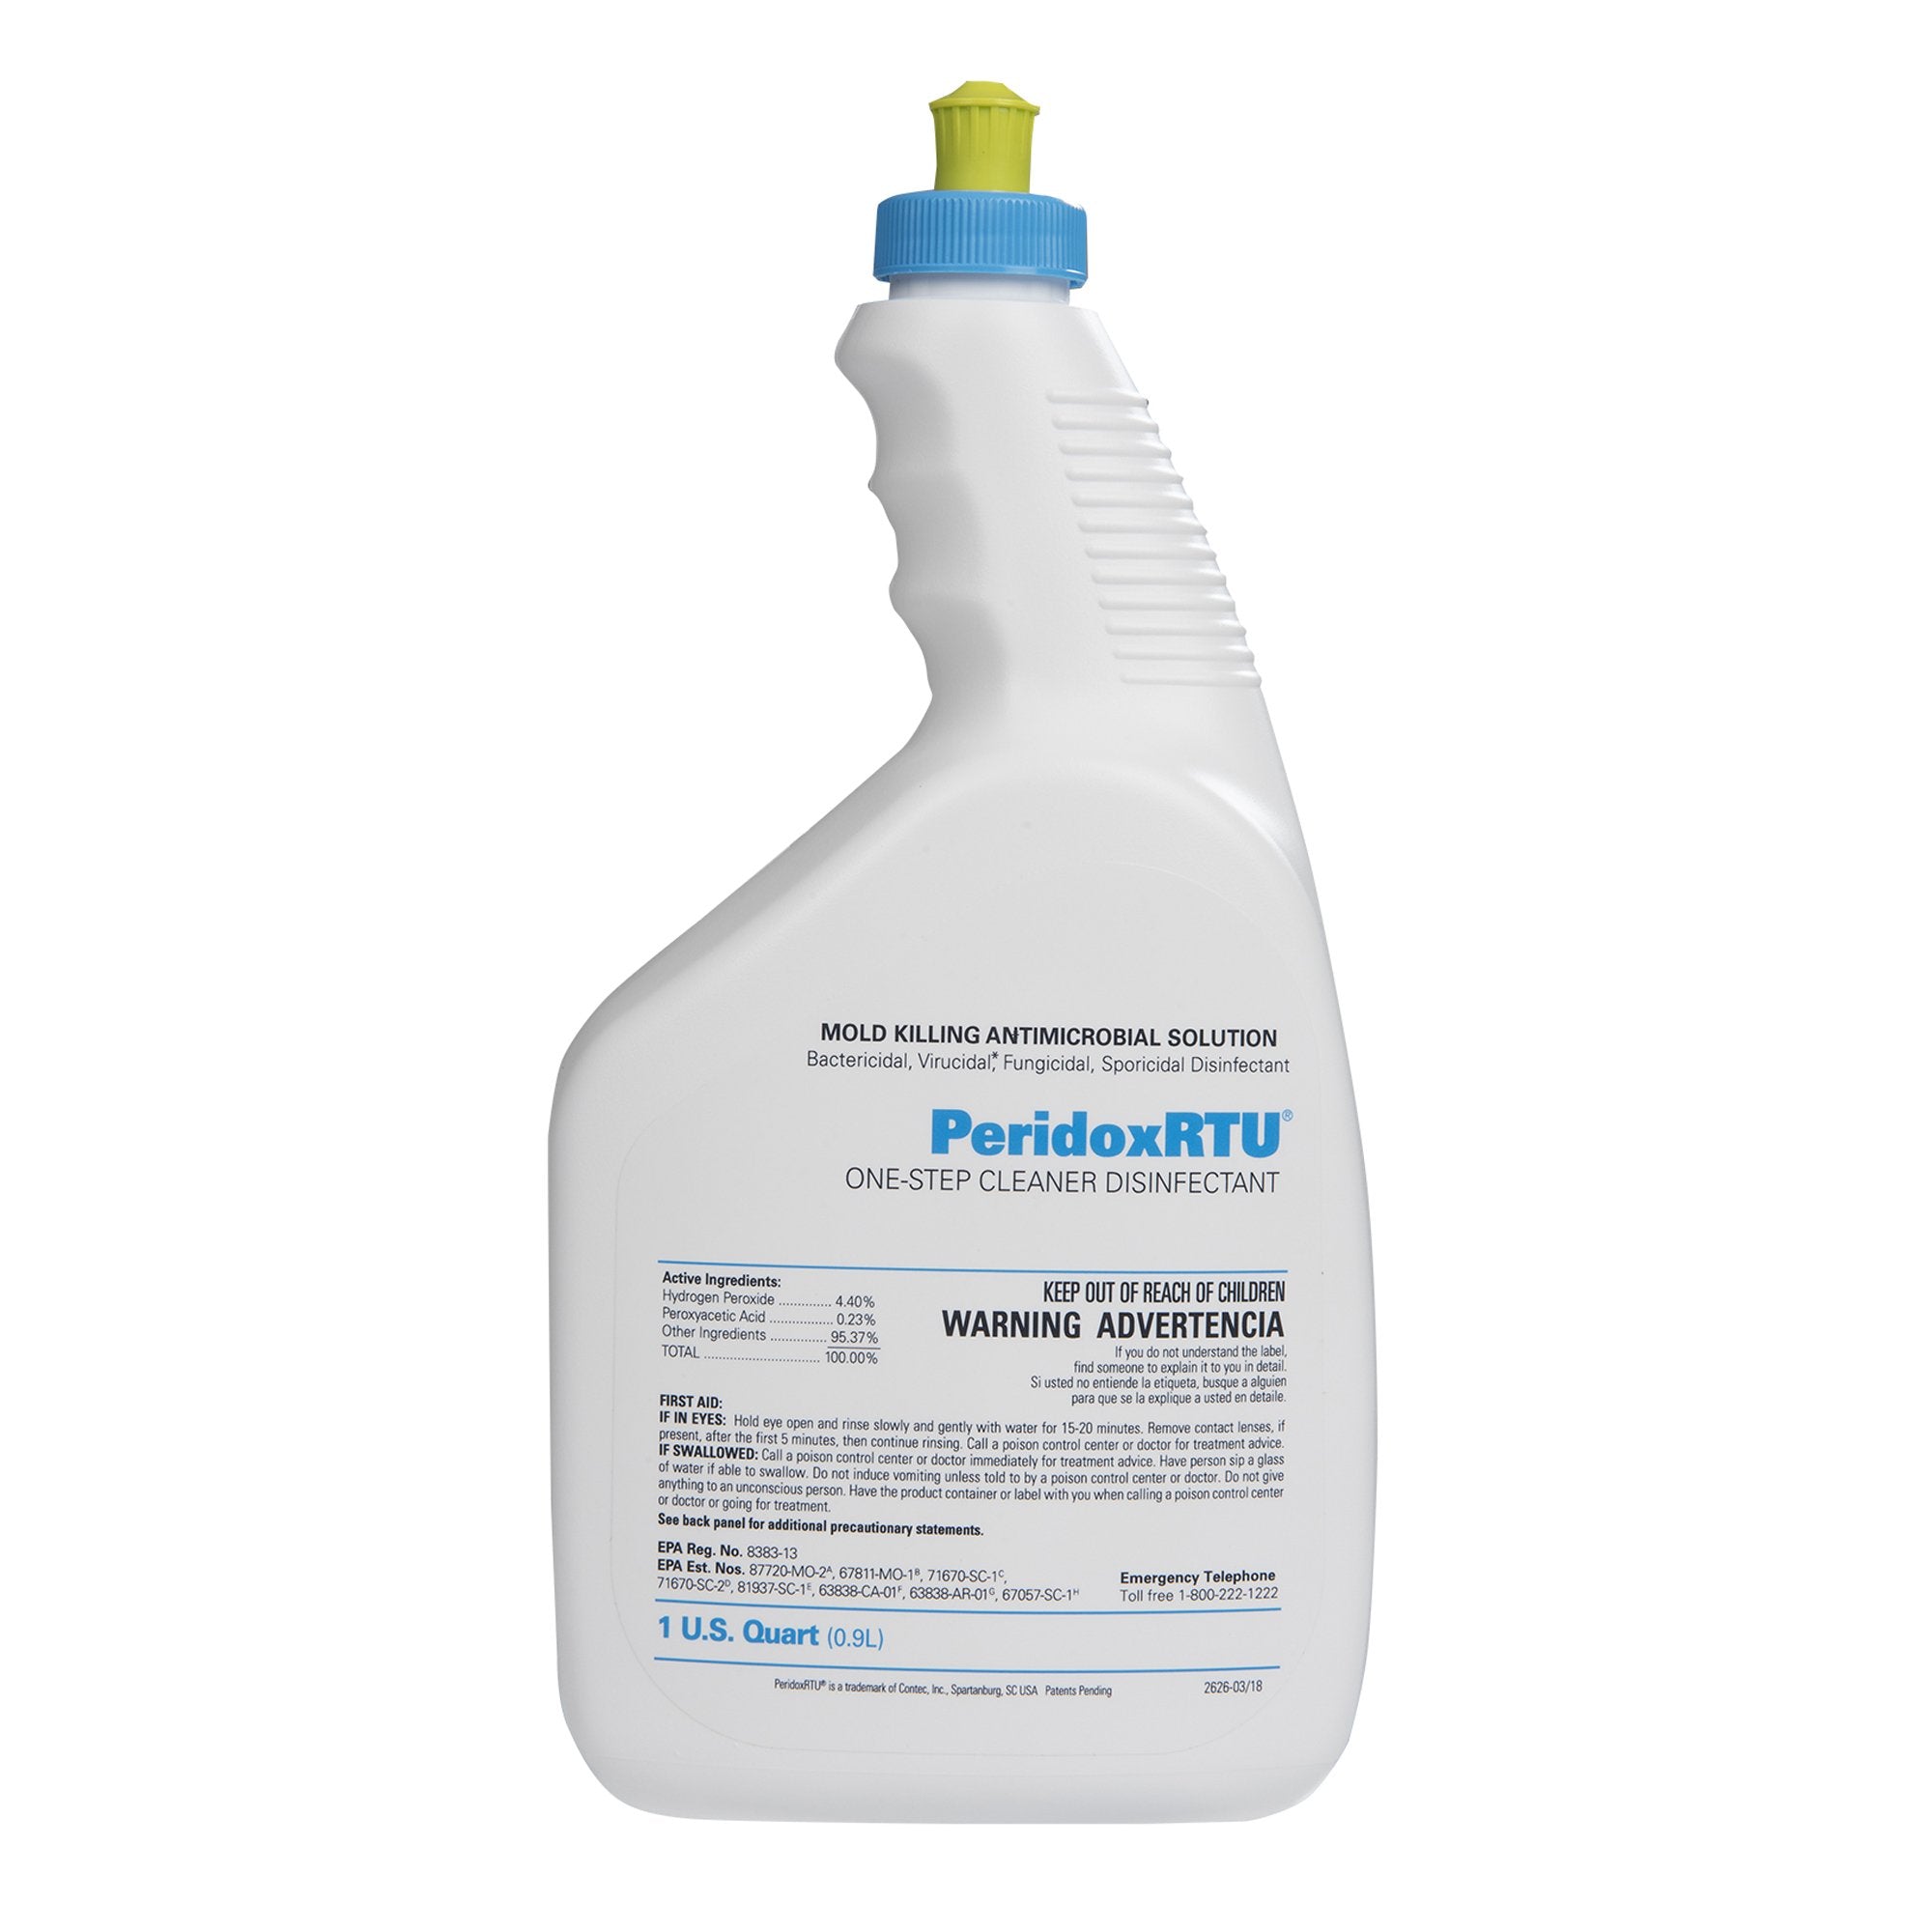 PeridoxRTU Sporicidal Surface Disinfectant Cleaner Peroxide Based Manual Pour Liquid 32 oz. Bottle Vinegar Scent Sterile